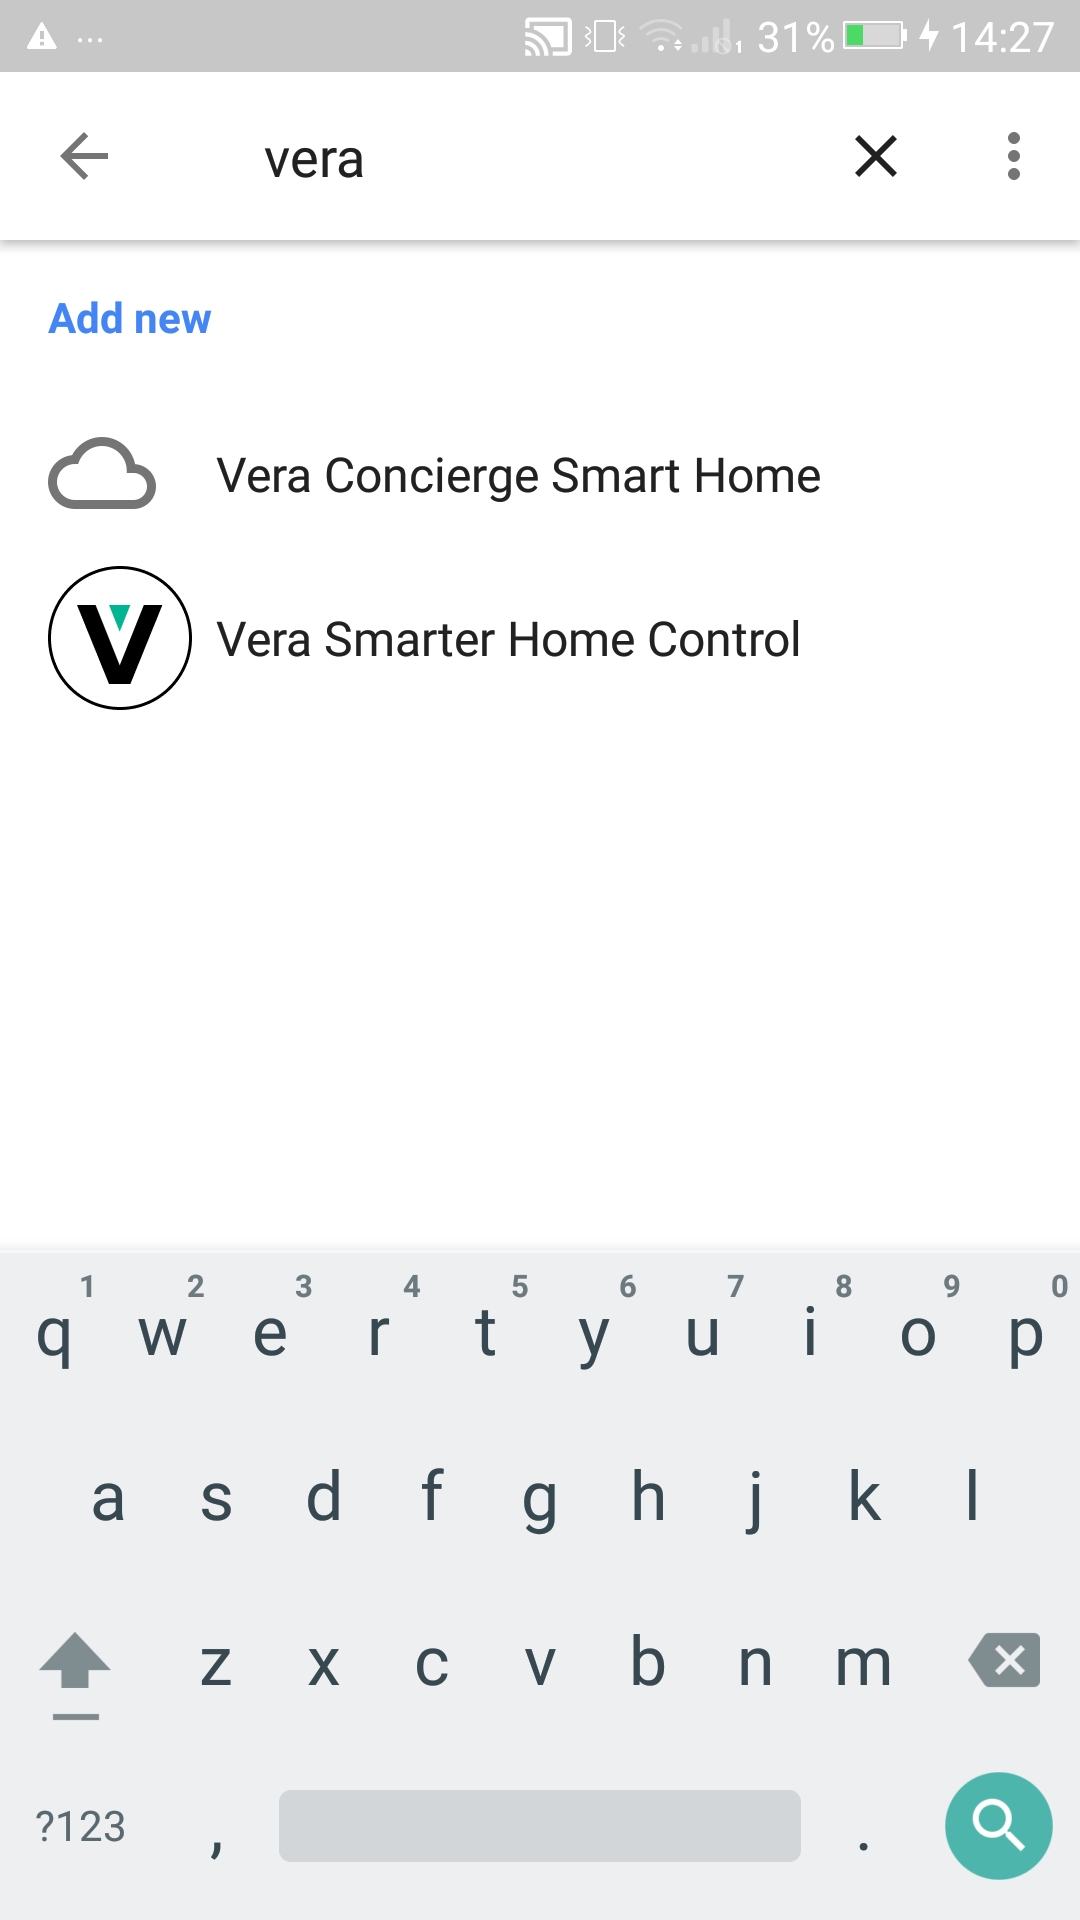 vera-smarter-home-control.jpg